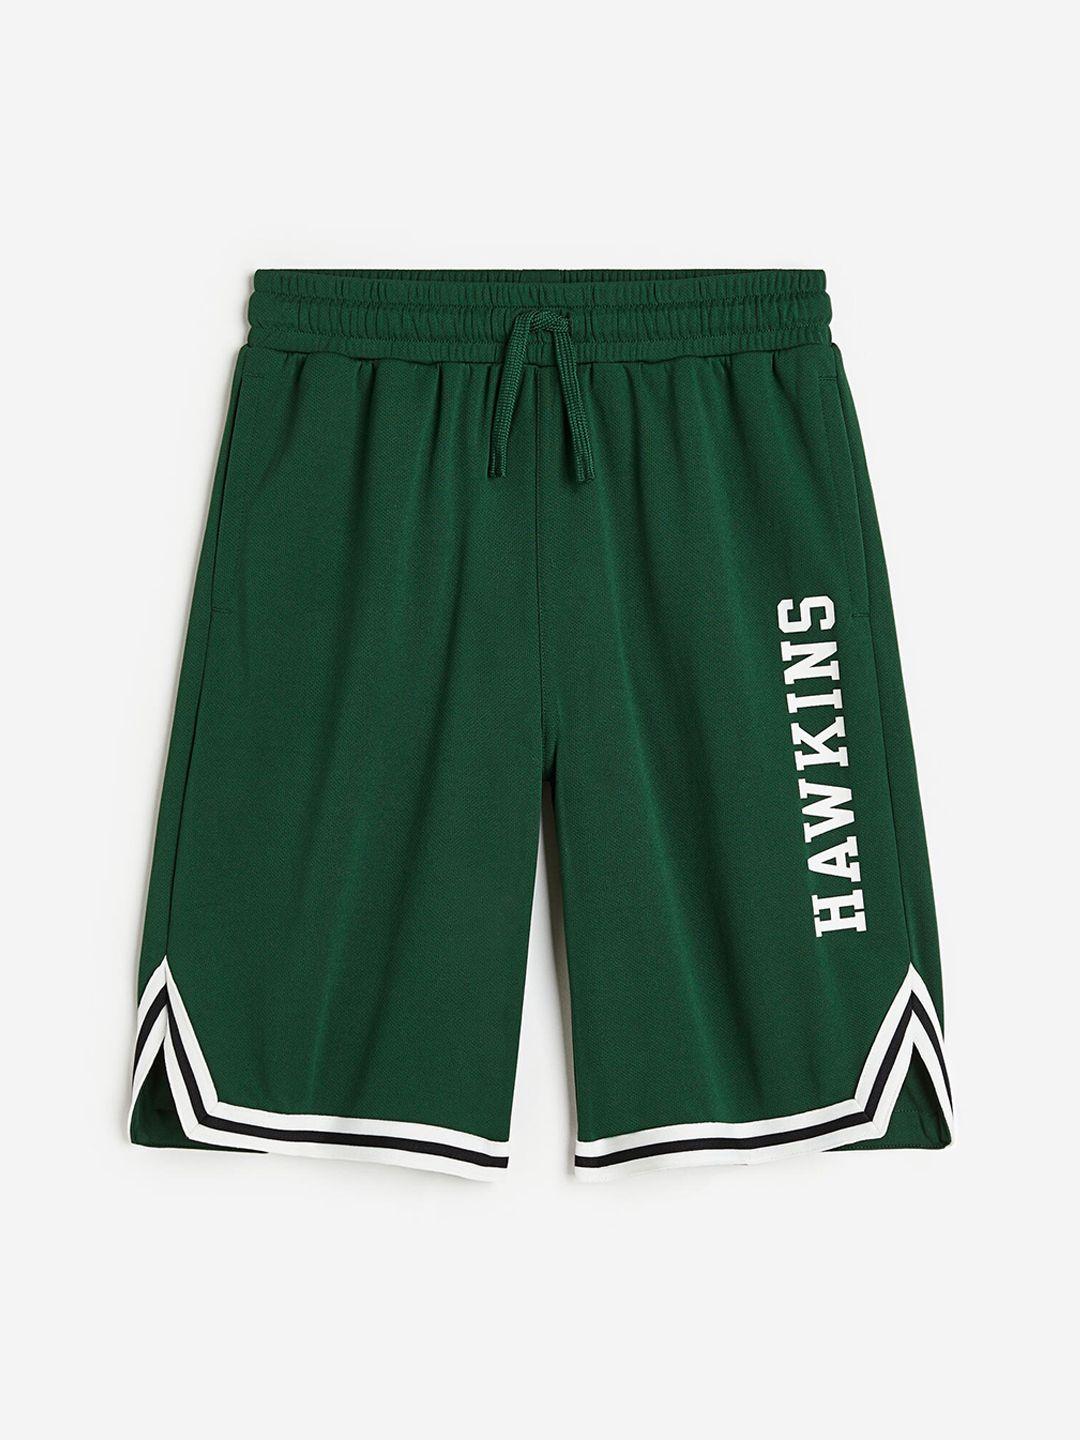 h&m boys printed basketball shorts